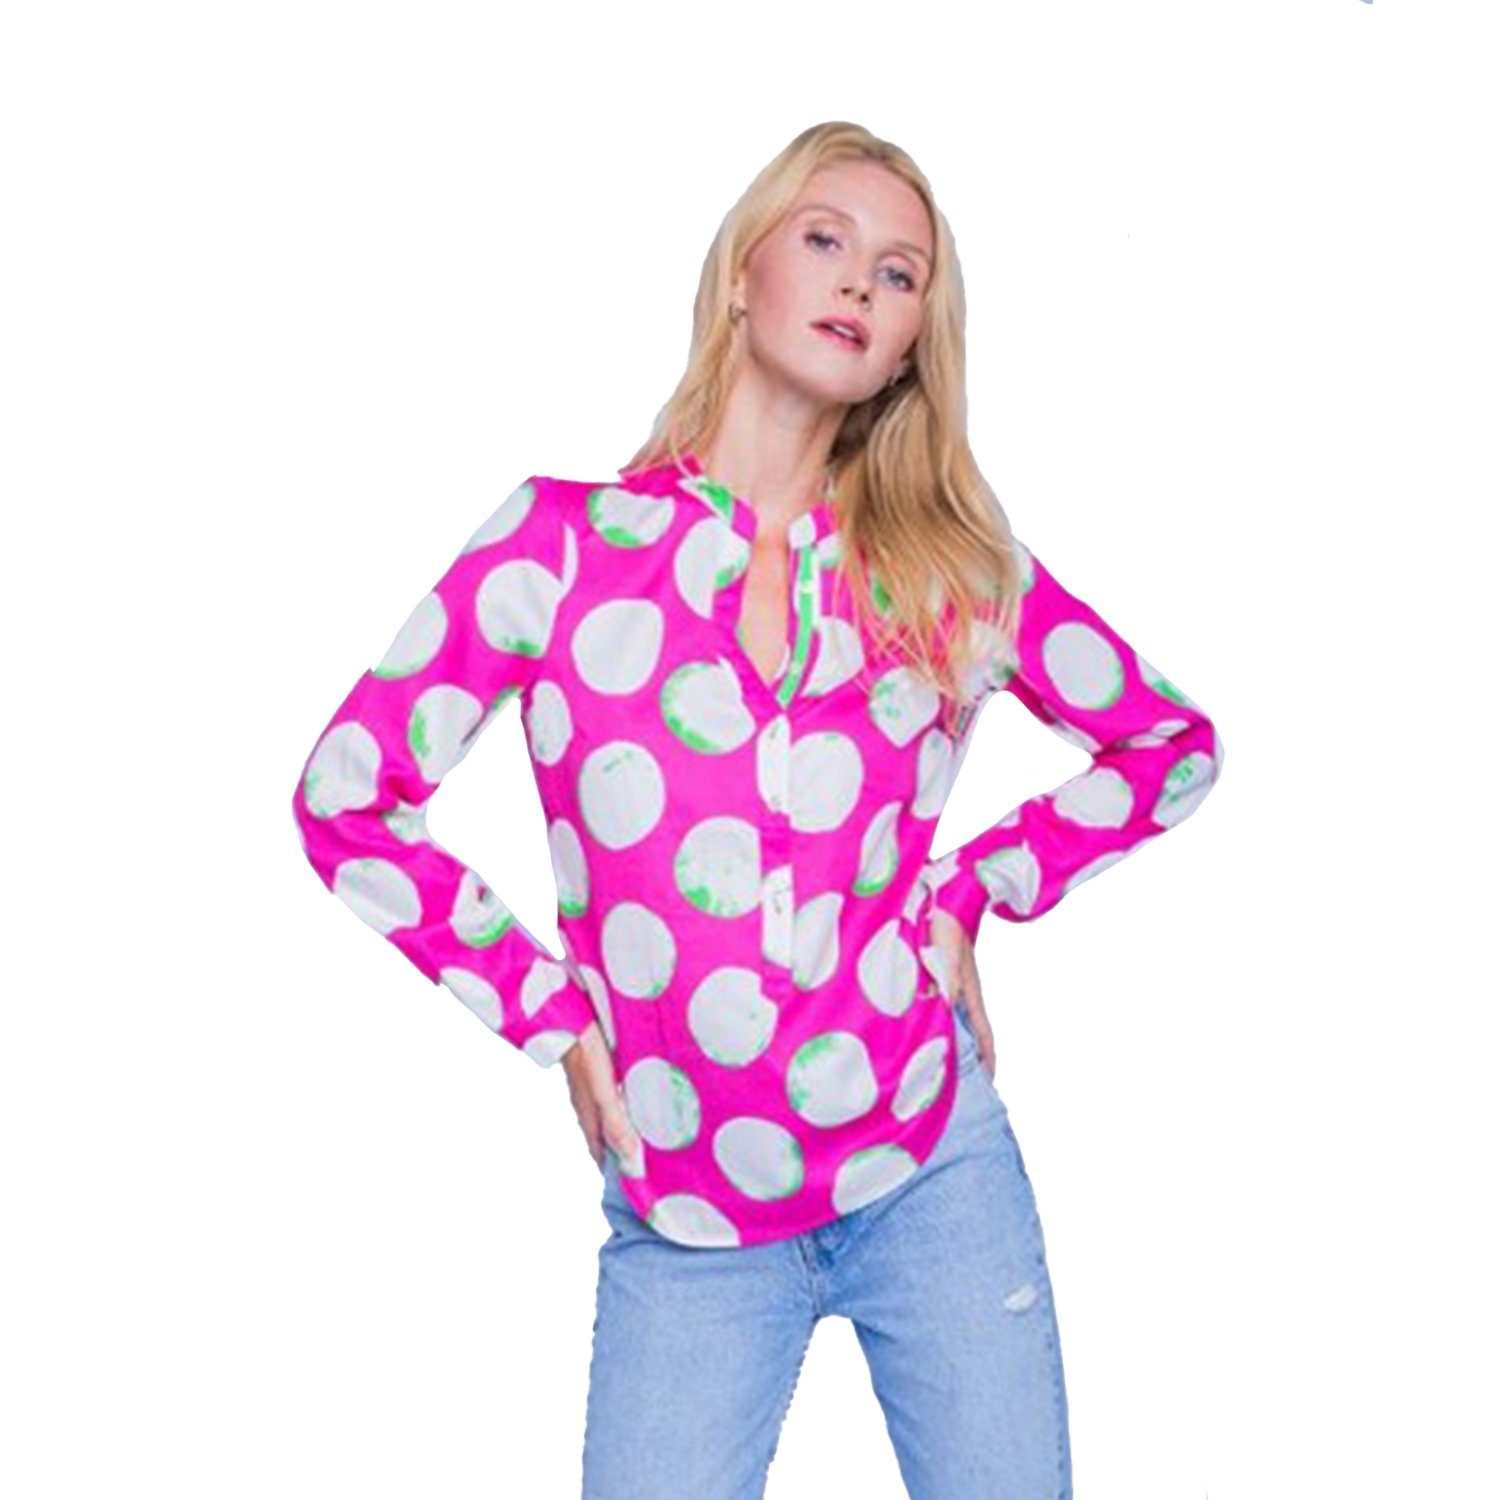 Emily Van Den Bergh Shirtbluse mit leuchtendem Dots - pink | Blusenshirts